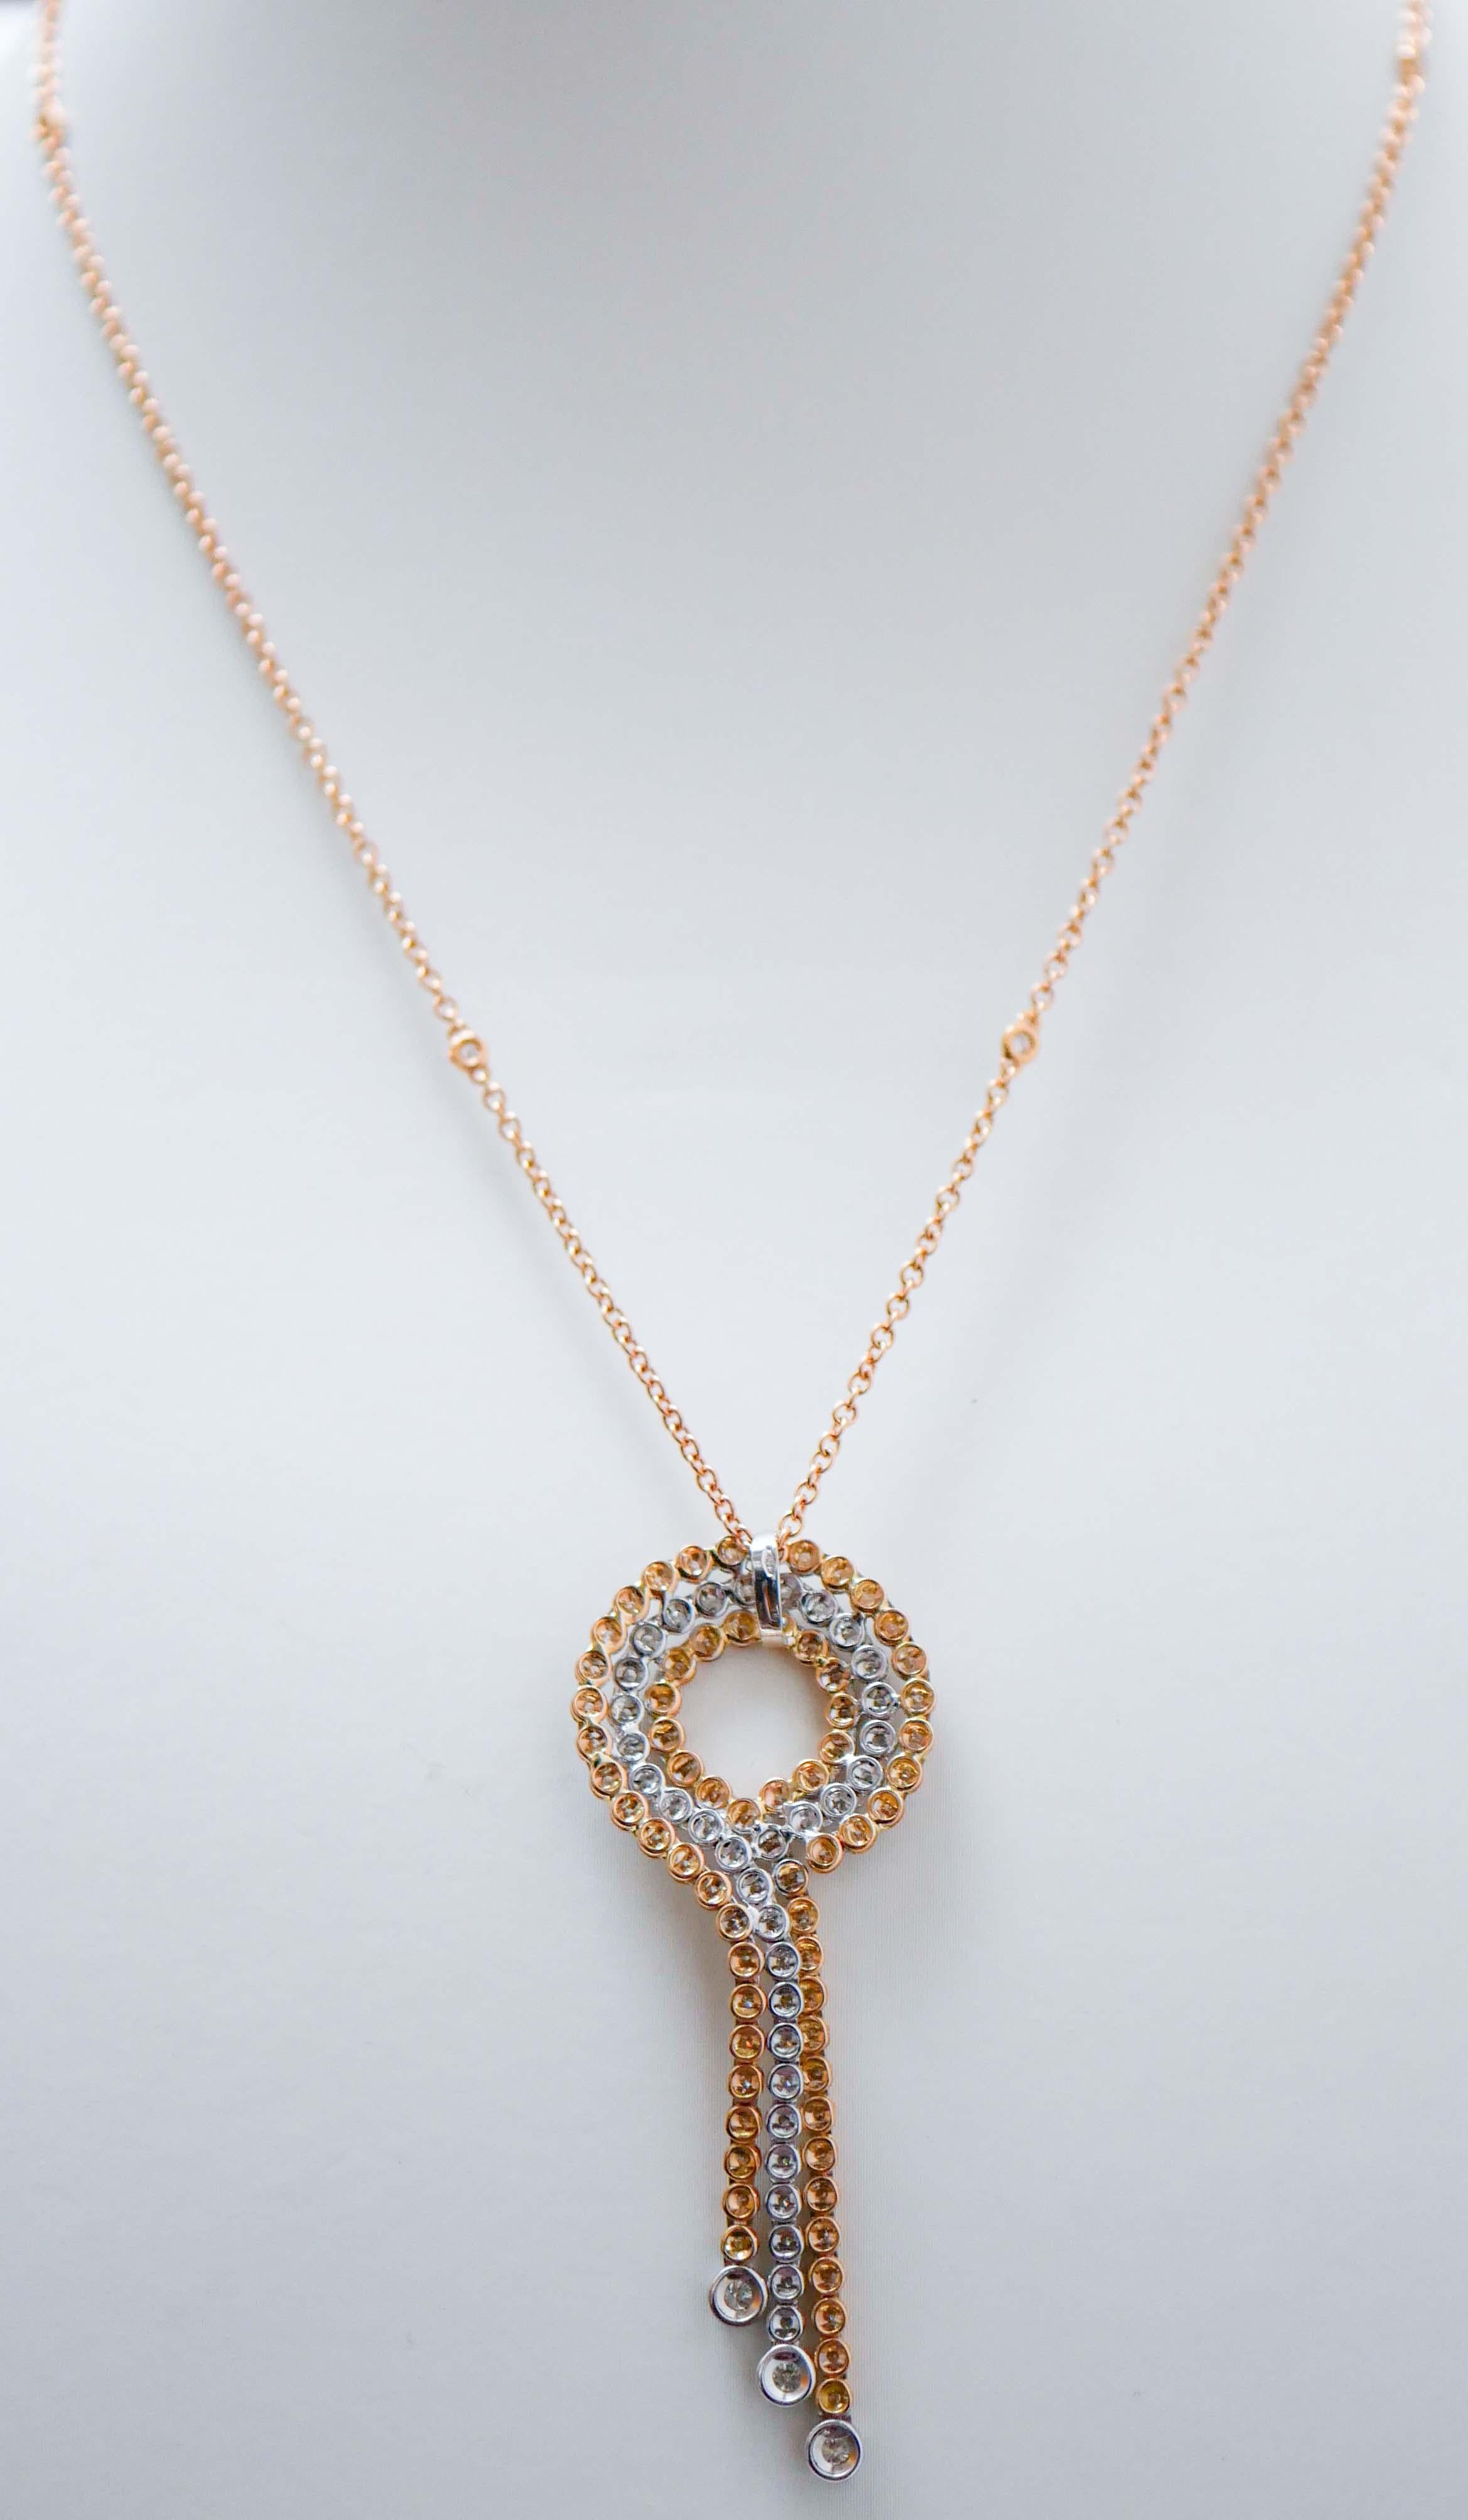 Brilliant Cut Diamonds, 18 Karat Rose Gold and White Gold Pendant Necklace. For Sale